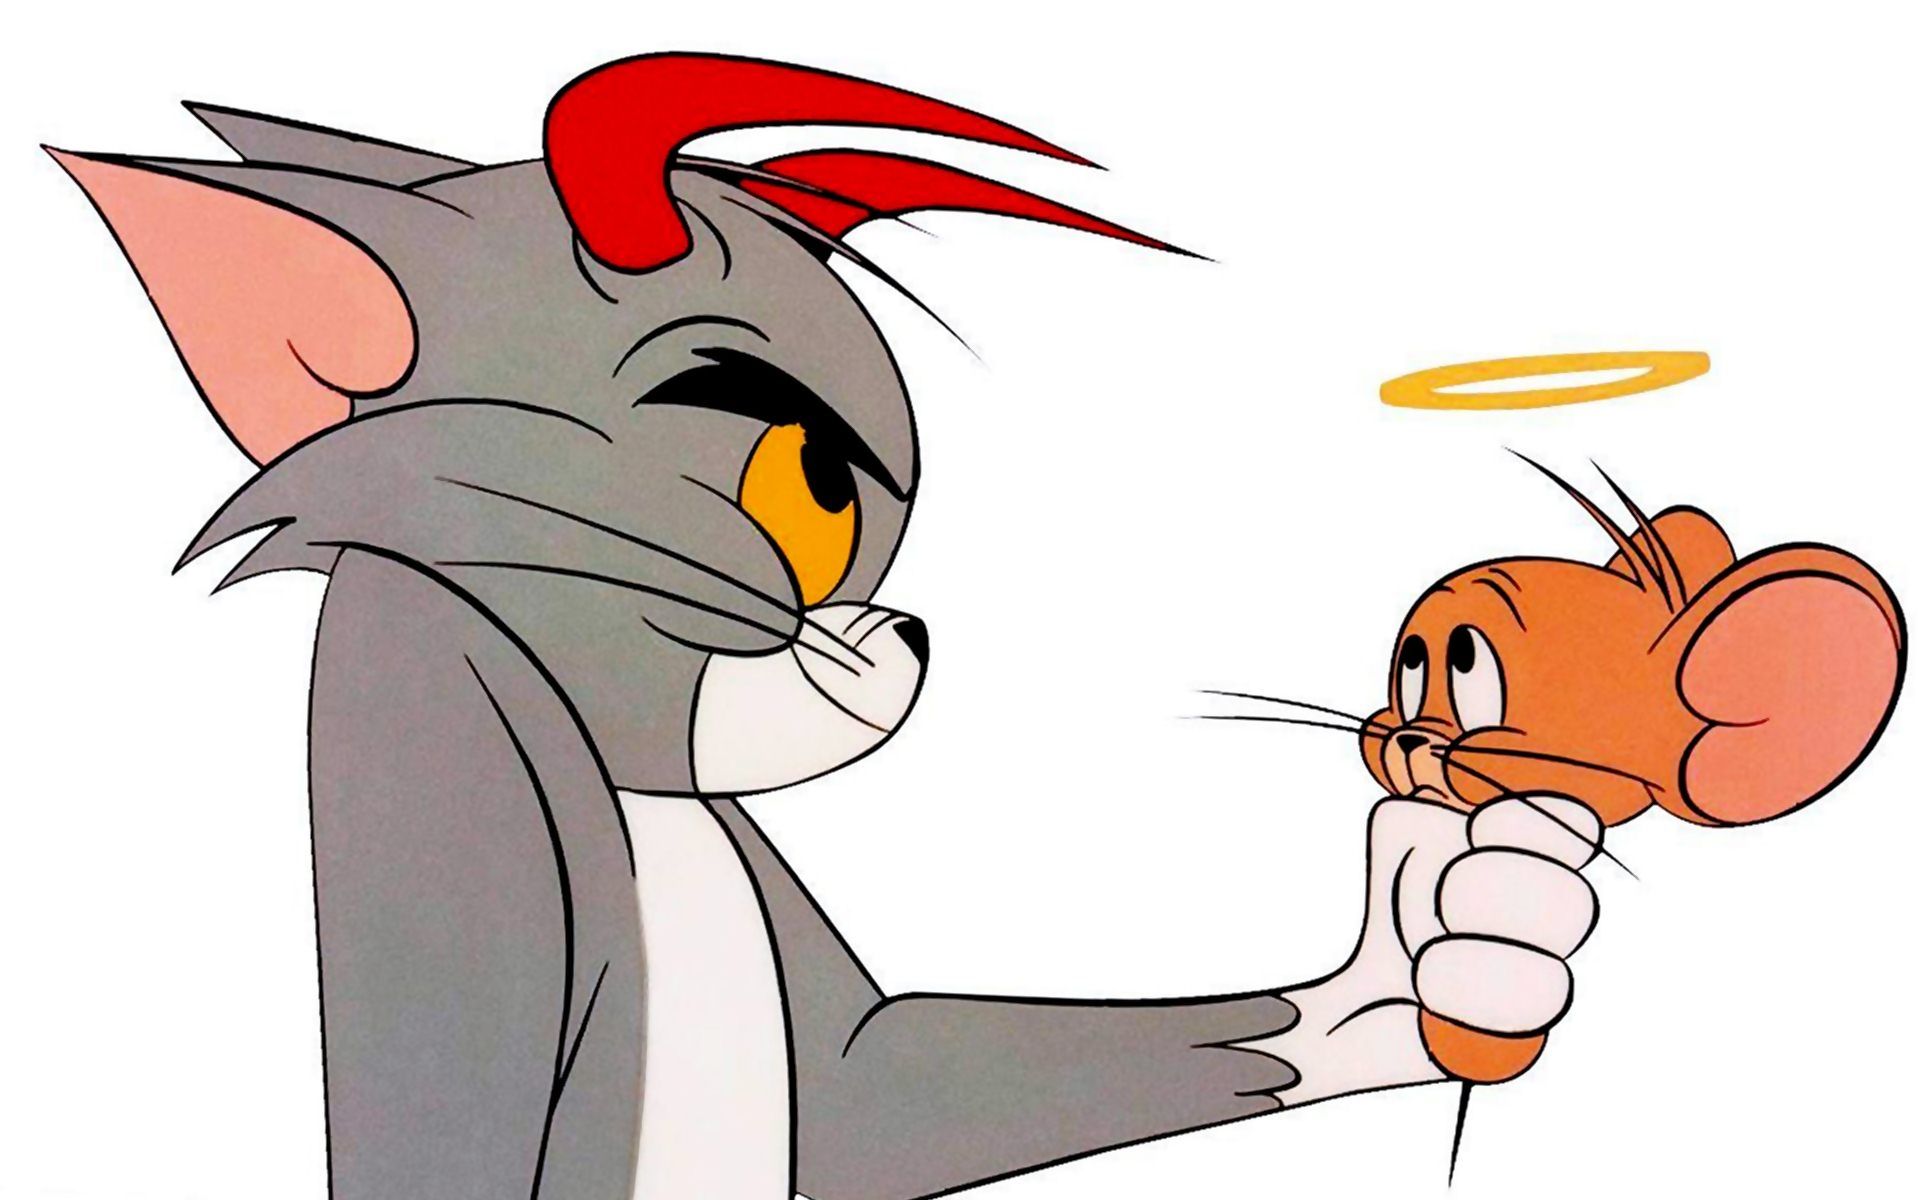 Tom And Jerry Bad And The Good Cartoons 4k Uhd Wallpaper 1920x1200 : Wallpaper13.com